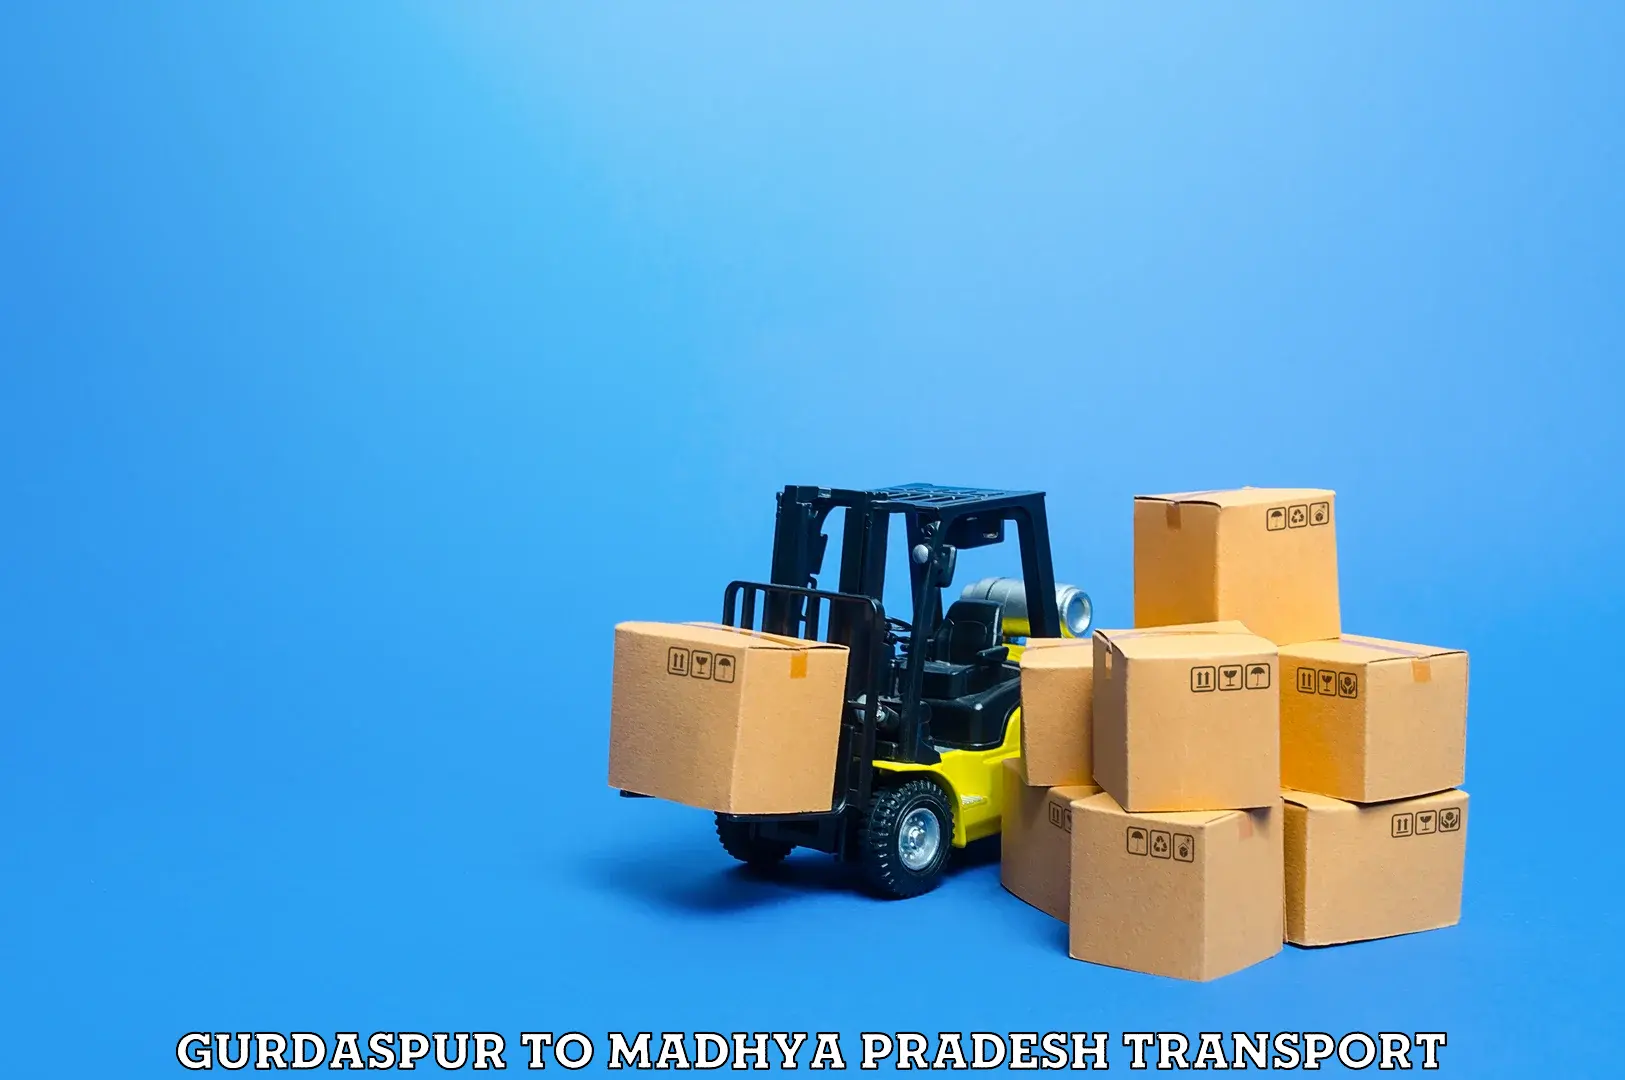 Delivery service Gurdaspur to Garoth